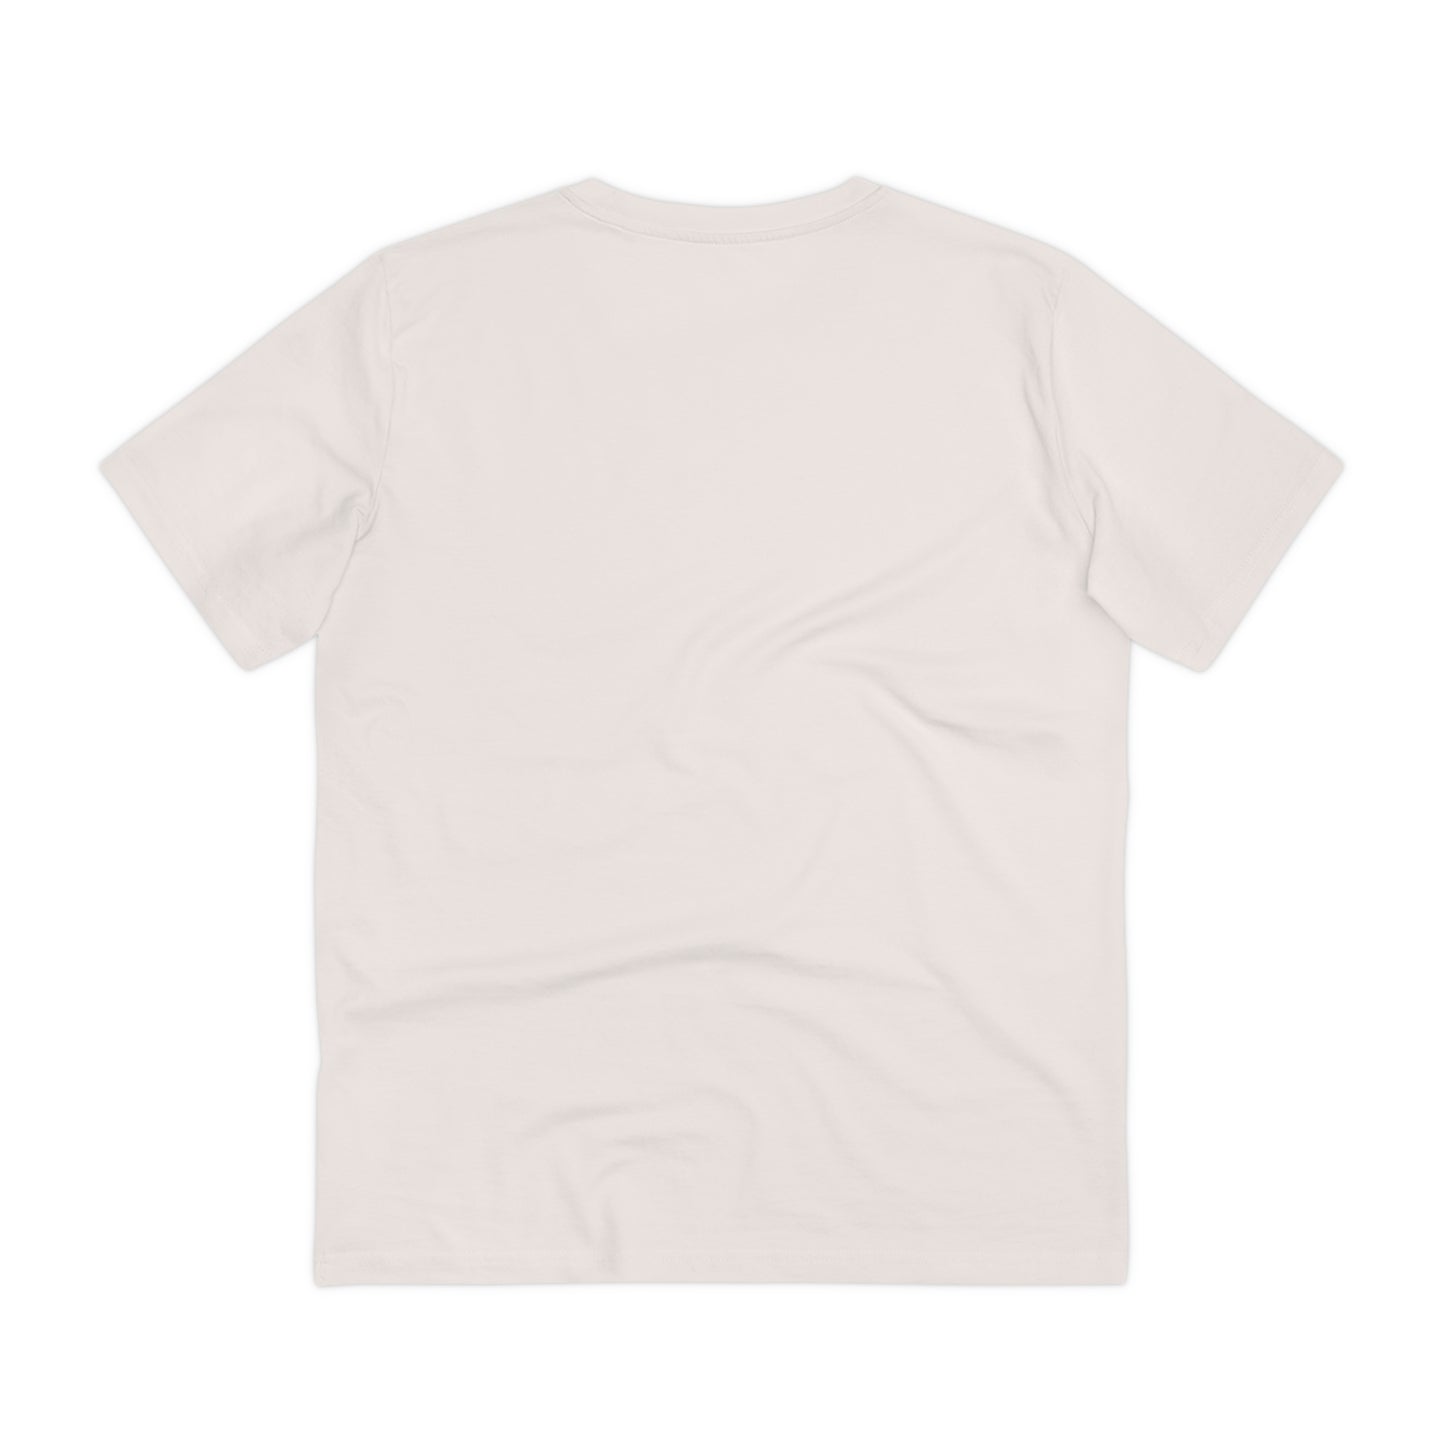 Justabarth T-Shirt #8